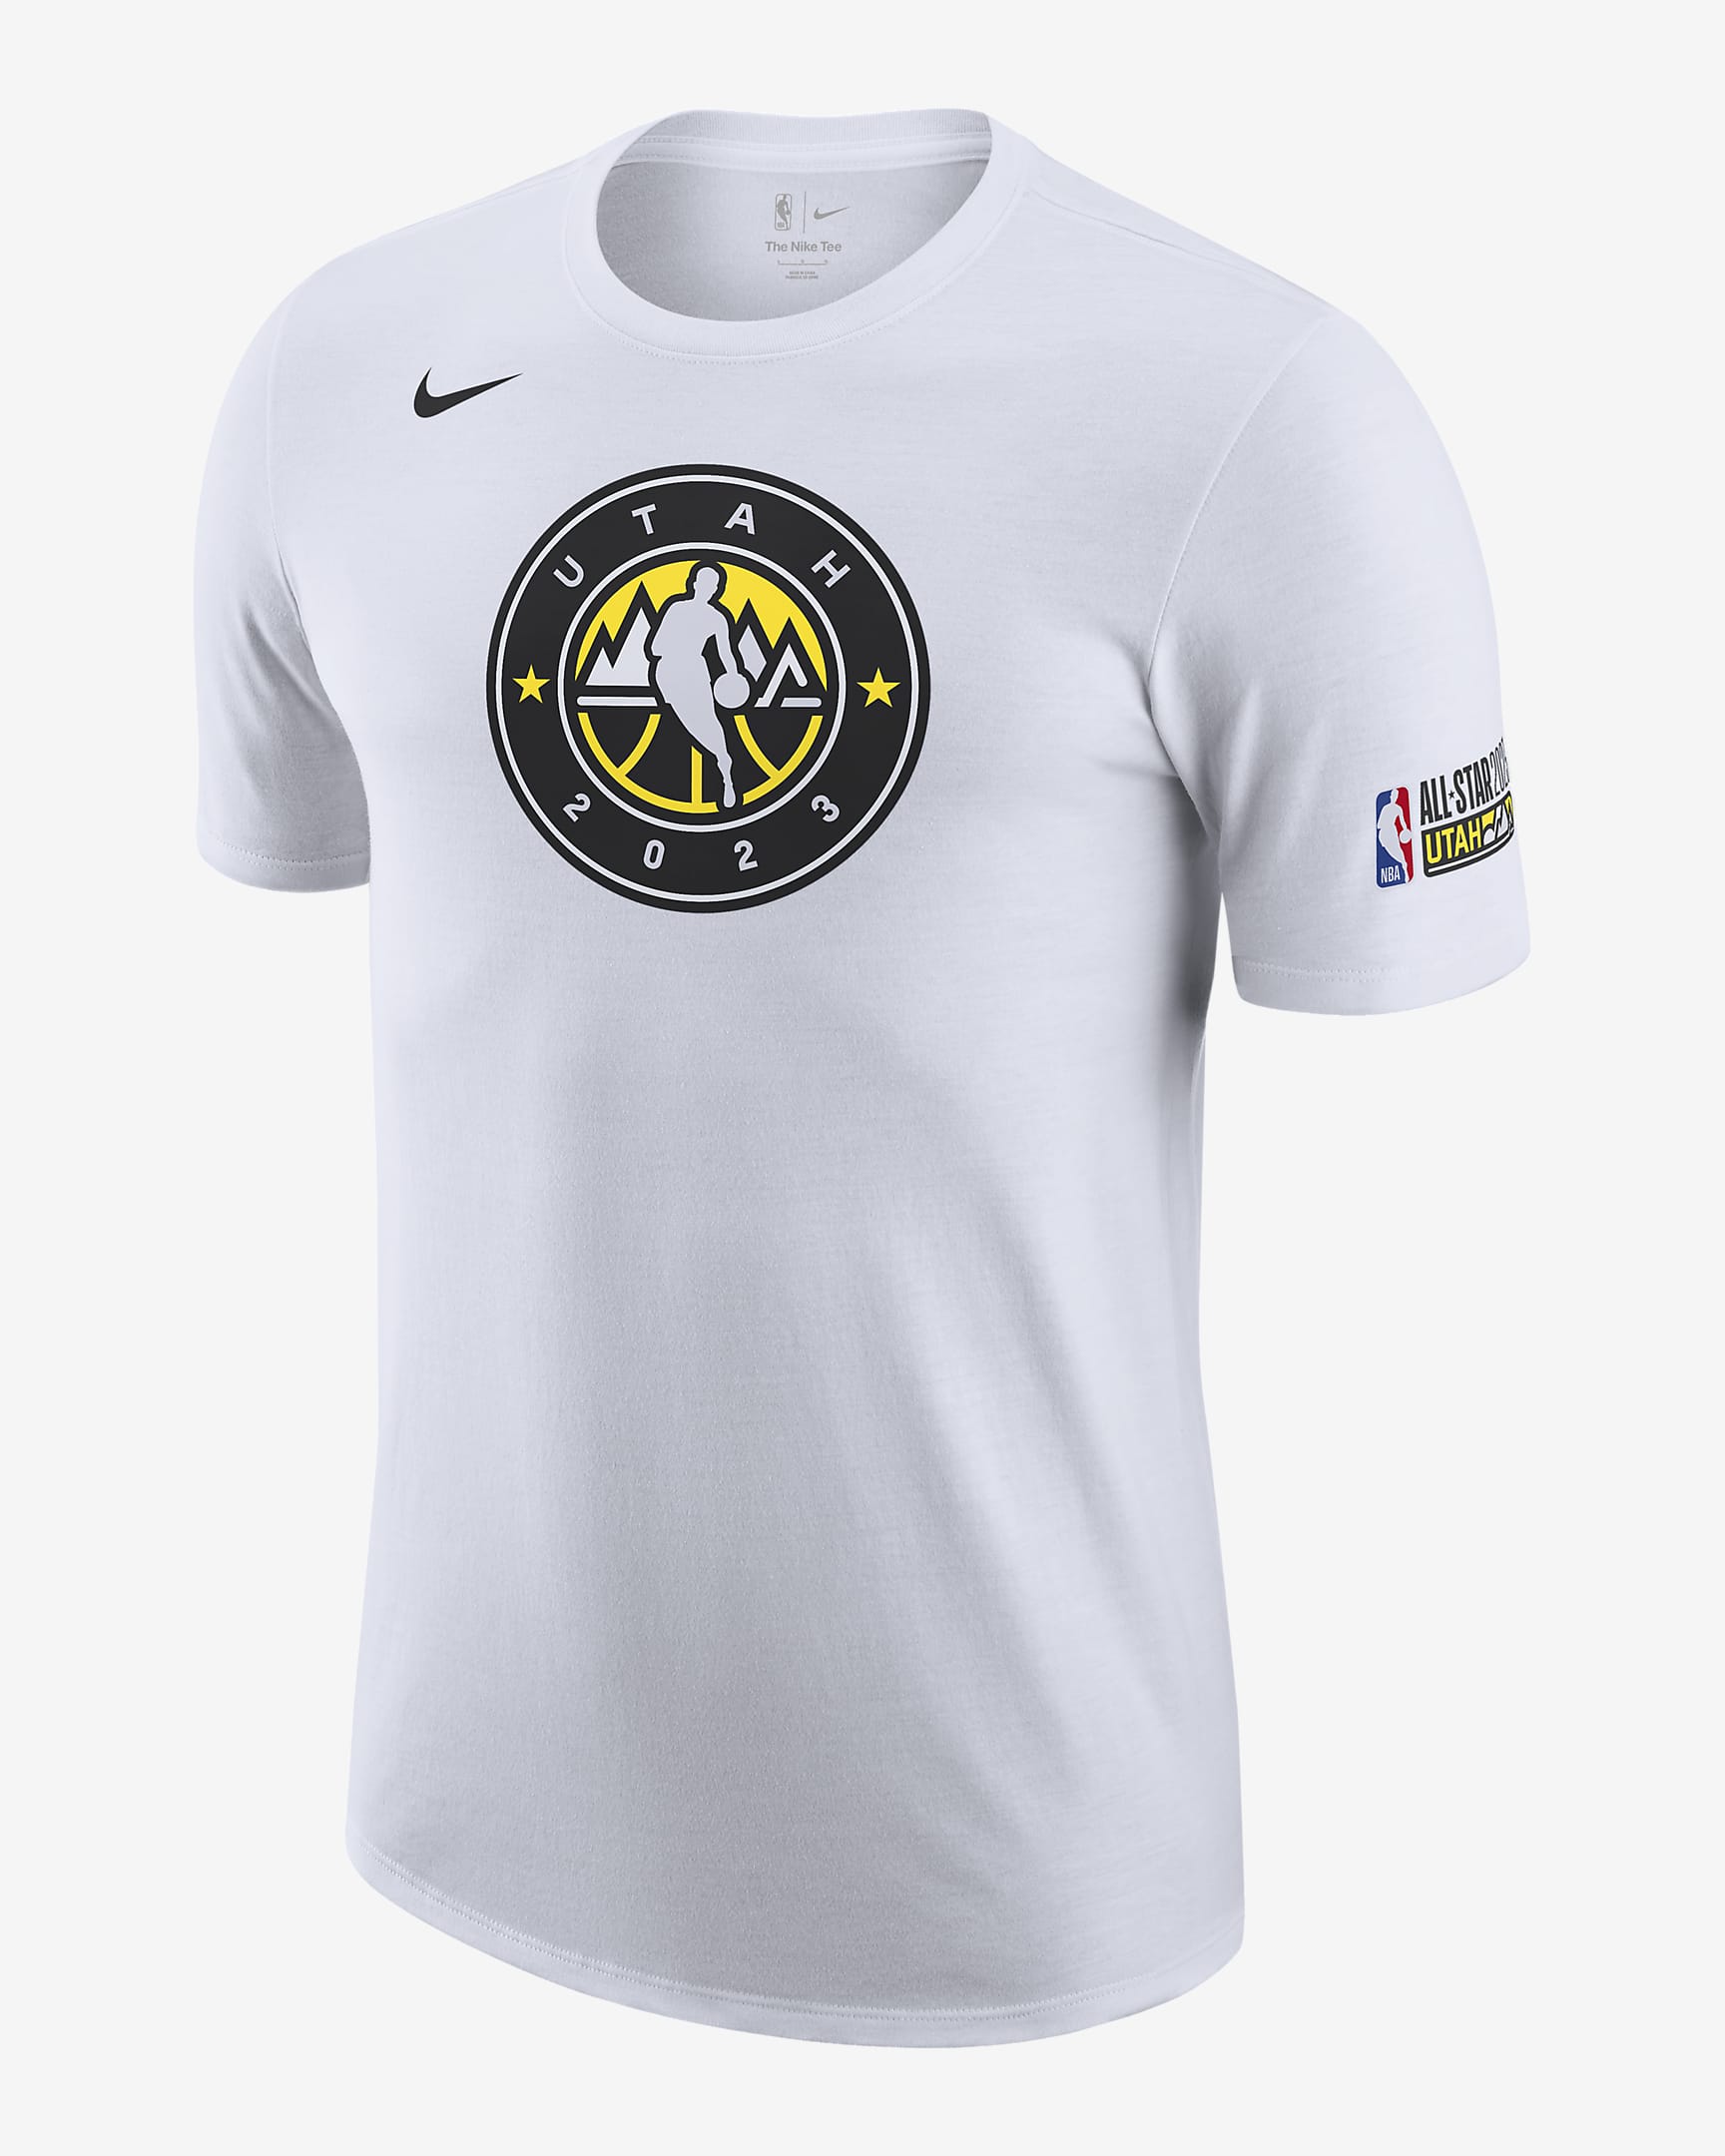 All-Star Essential Men's Nike NBA T-Shirt. Nike PH